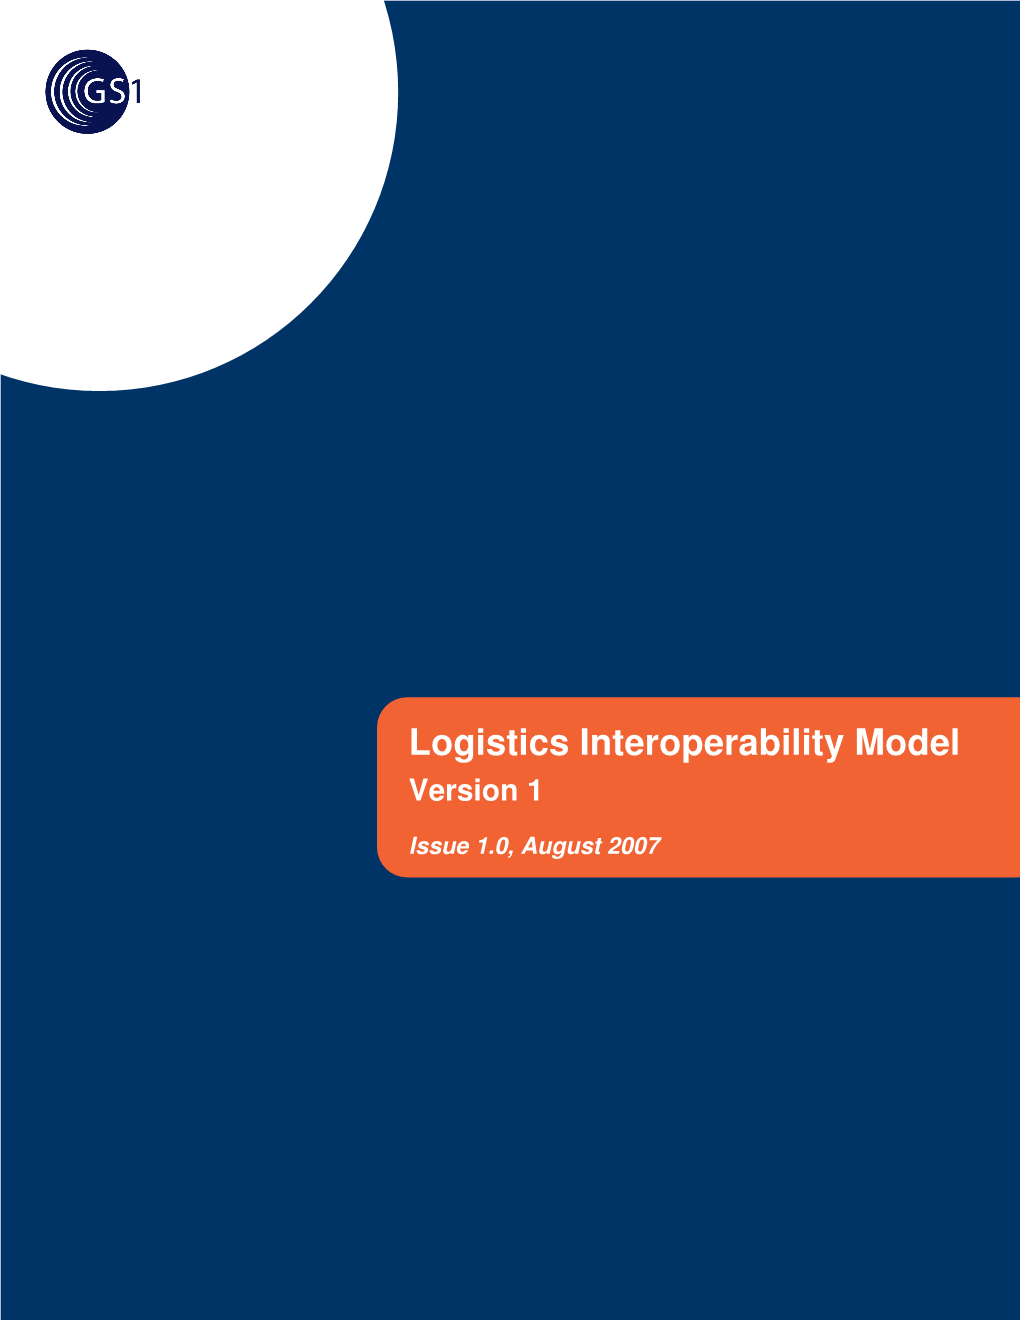 Logistics Interoperability Model (LIM) Report